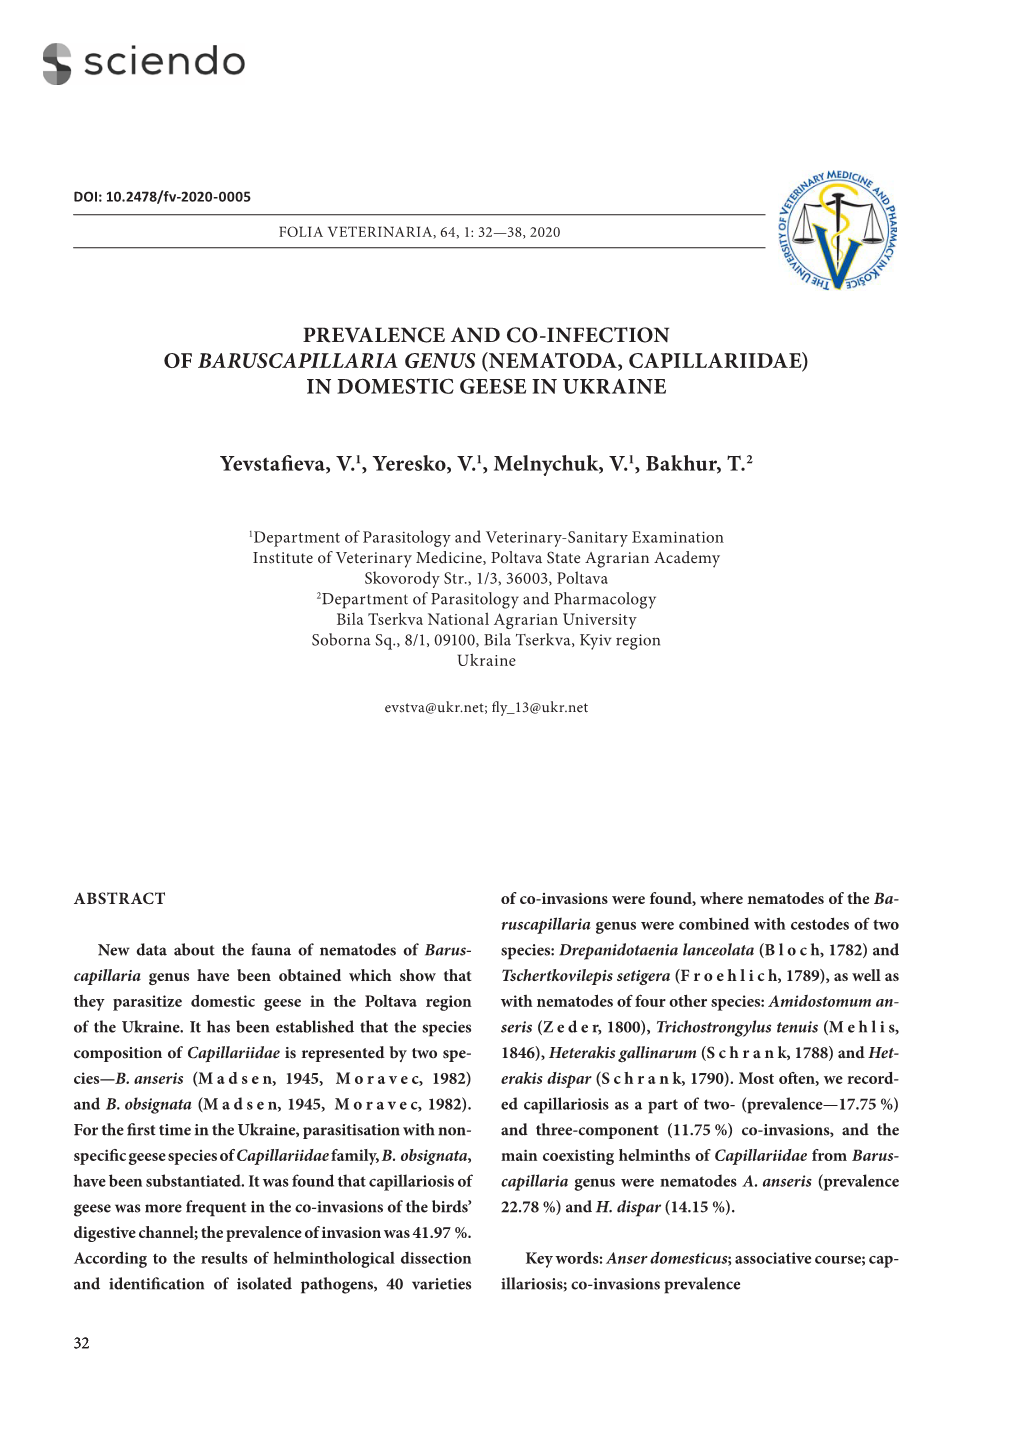 Prevalence and Co-Infection of Baruscapillaria Genus (Nematoda, Capillariidae) in Domestic Geese in Ukraine